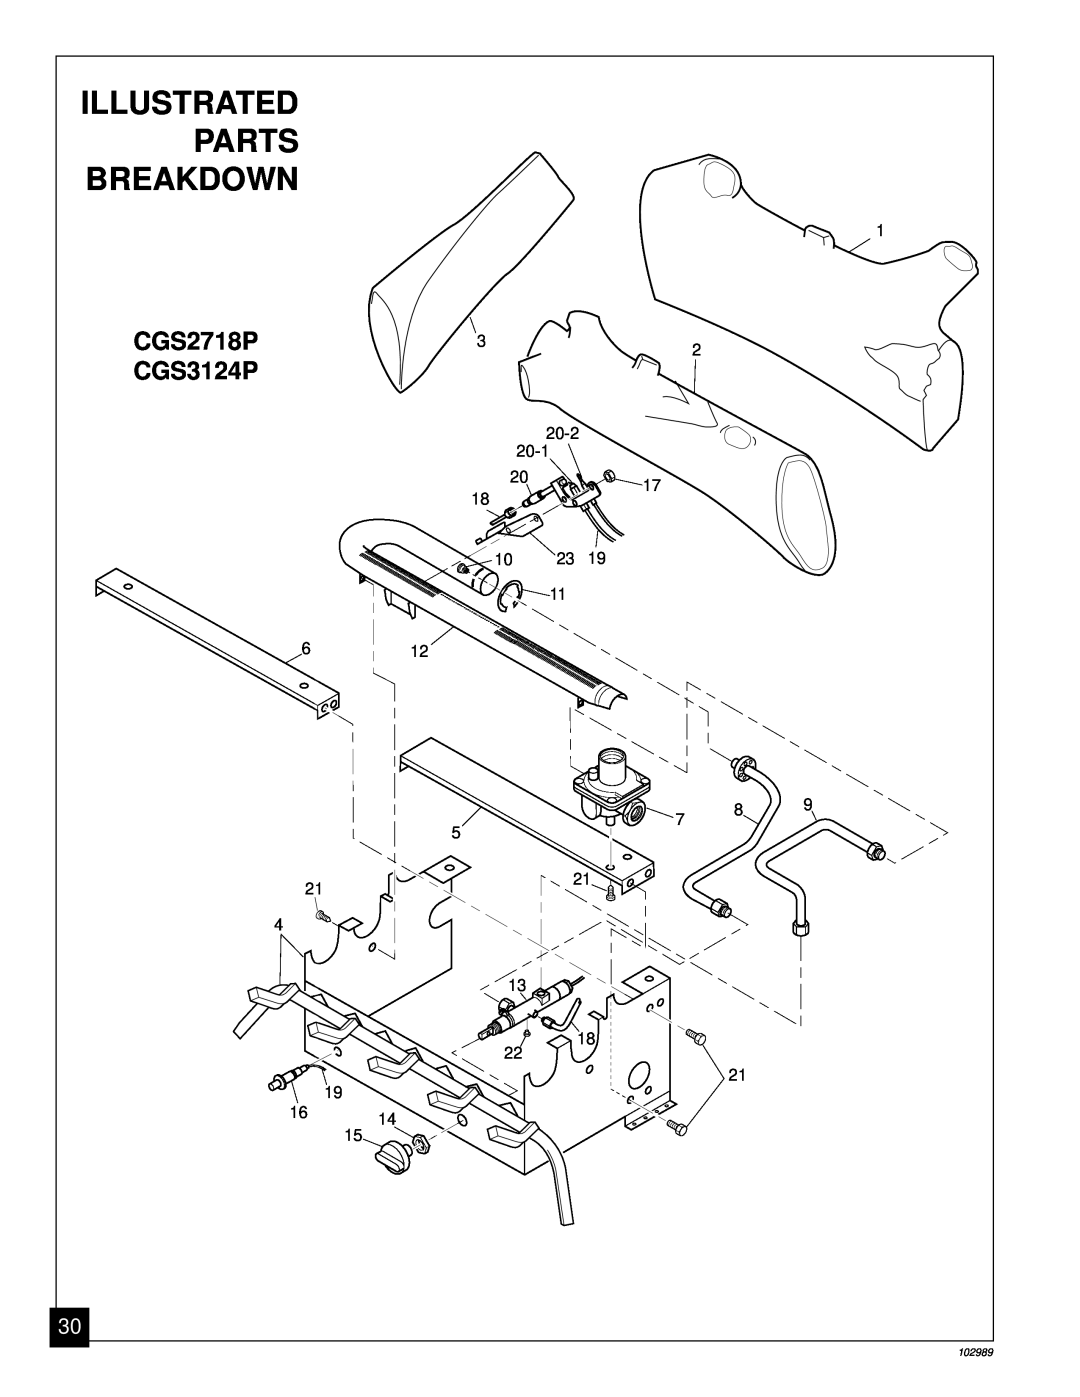 Desa CGS2718P installation manual Illustrated, Parts, Breakdown, CGS3124P 